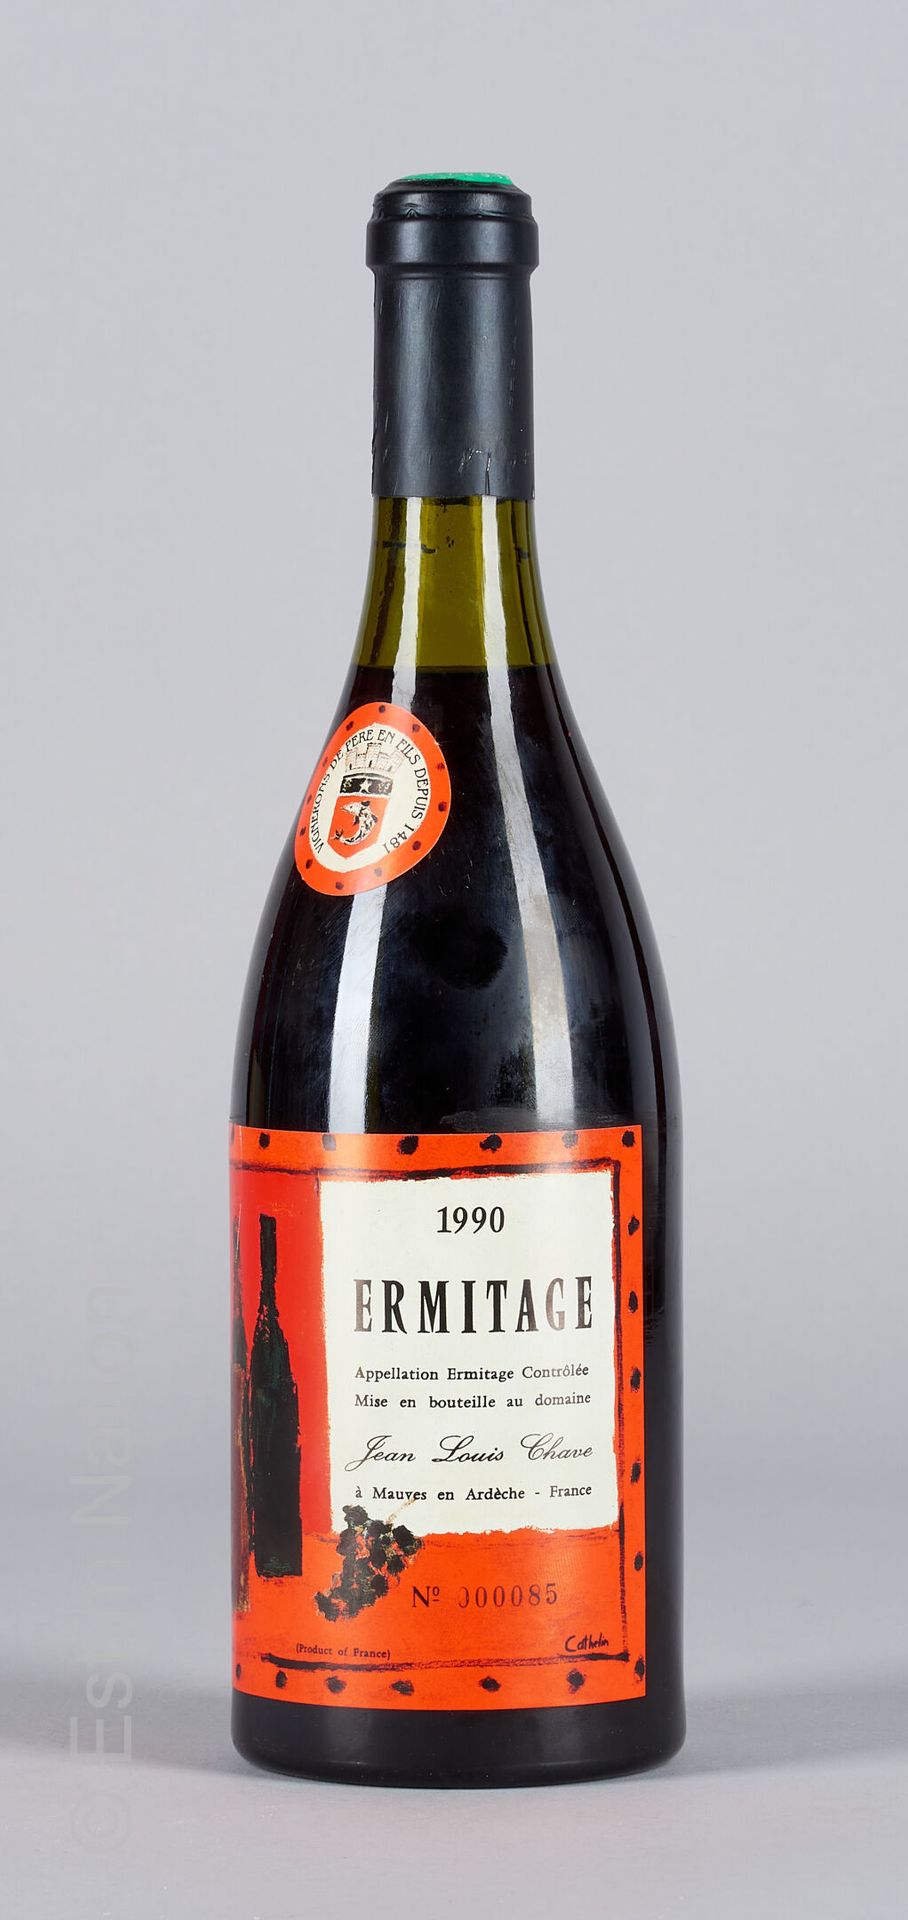 CUVEE CATHELIN 1瓶ERMITAGE 1990 Cuvée Cathelin Jean-Louis Chave

(N. 在3和3.5厘米之间)